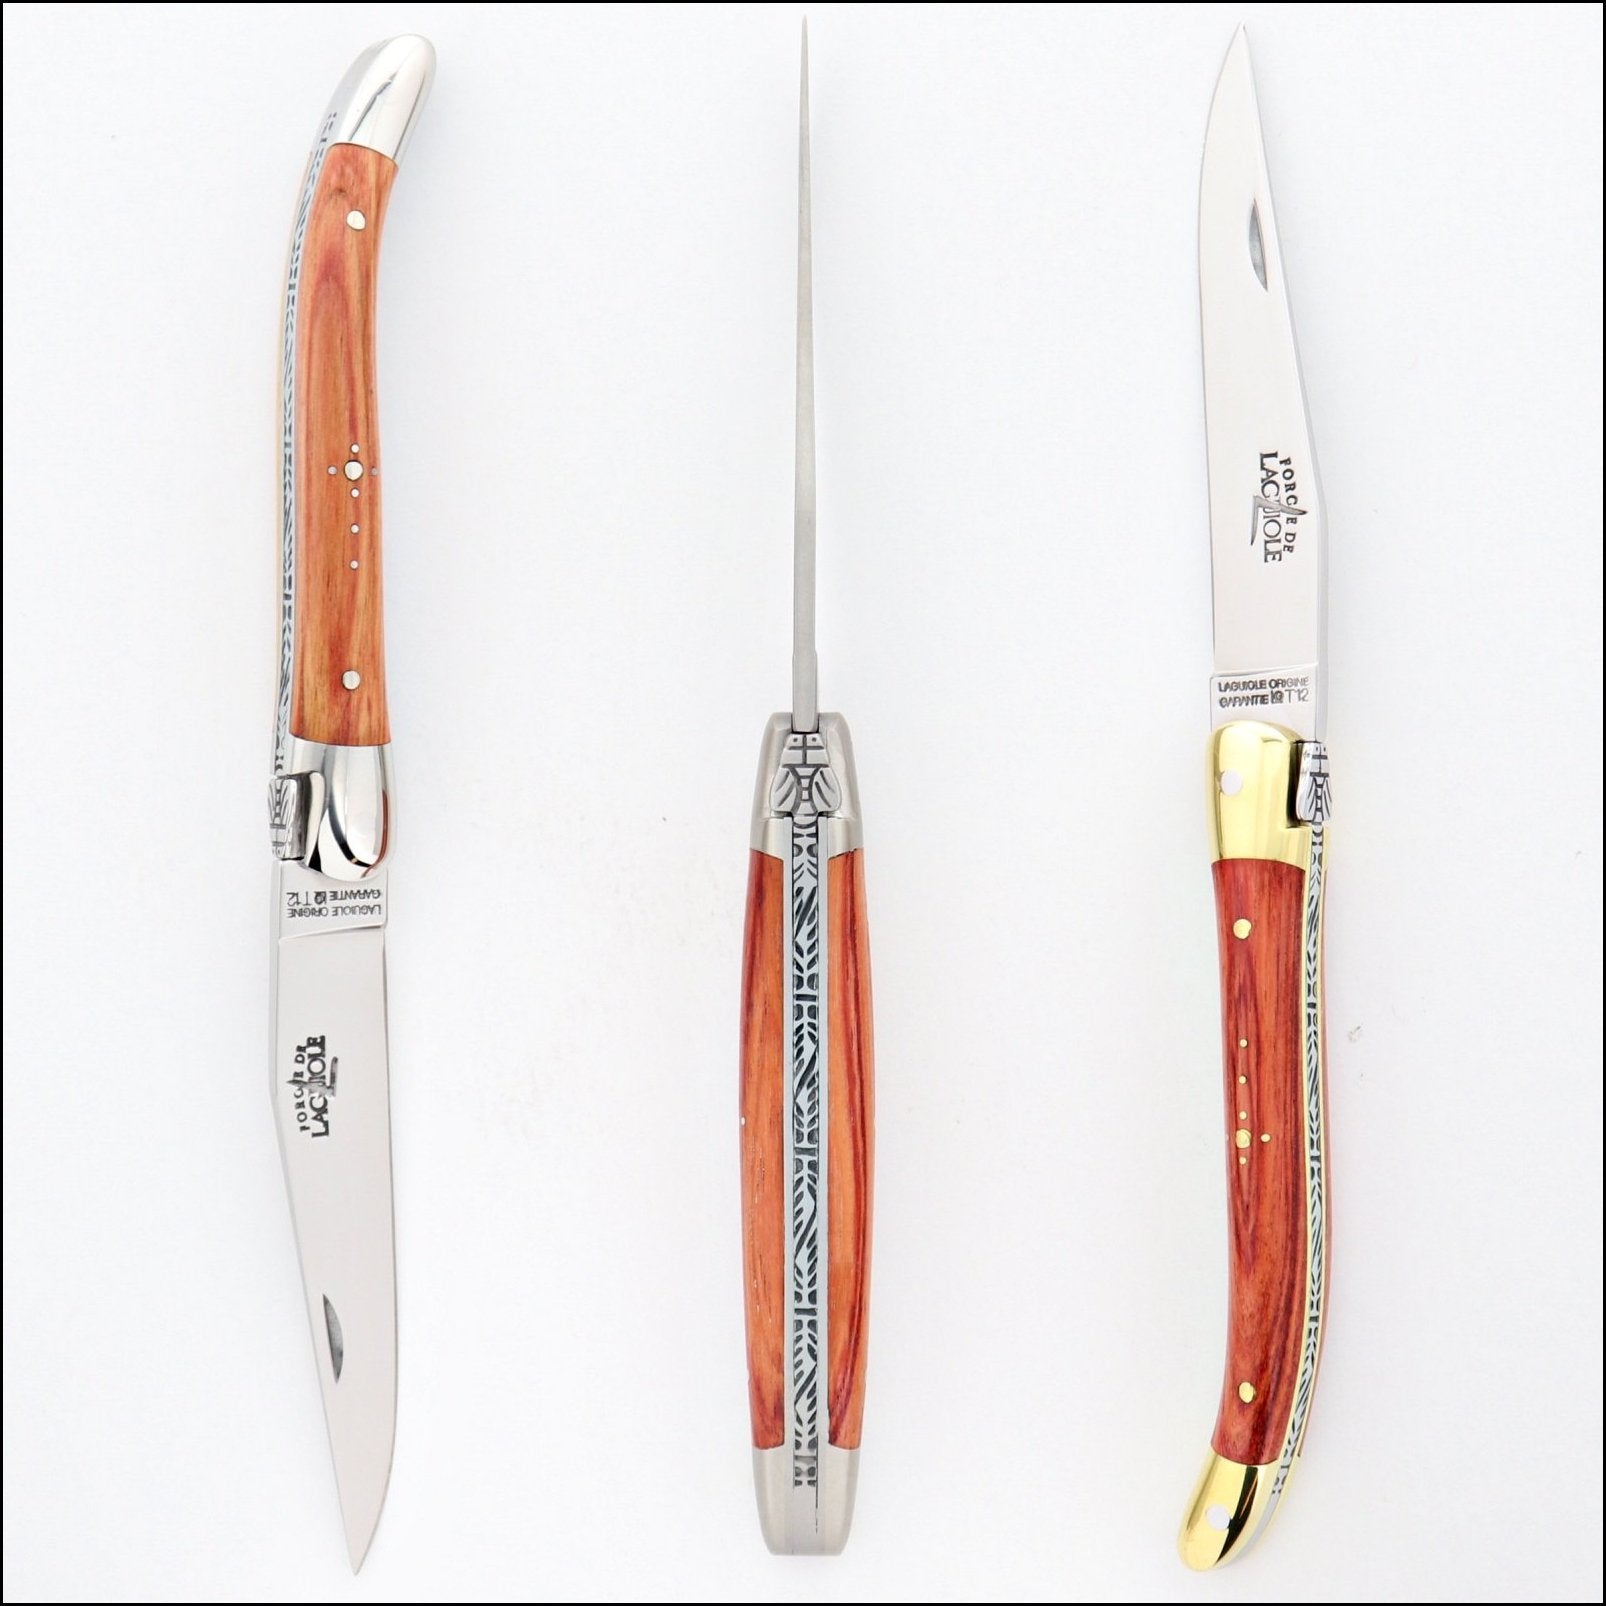 Forge de Laguiole Tradition 9 cm Rosewood-POCKET KNIFE